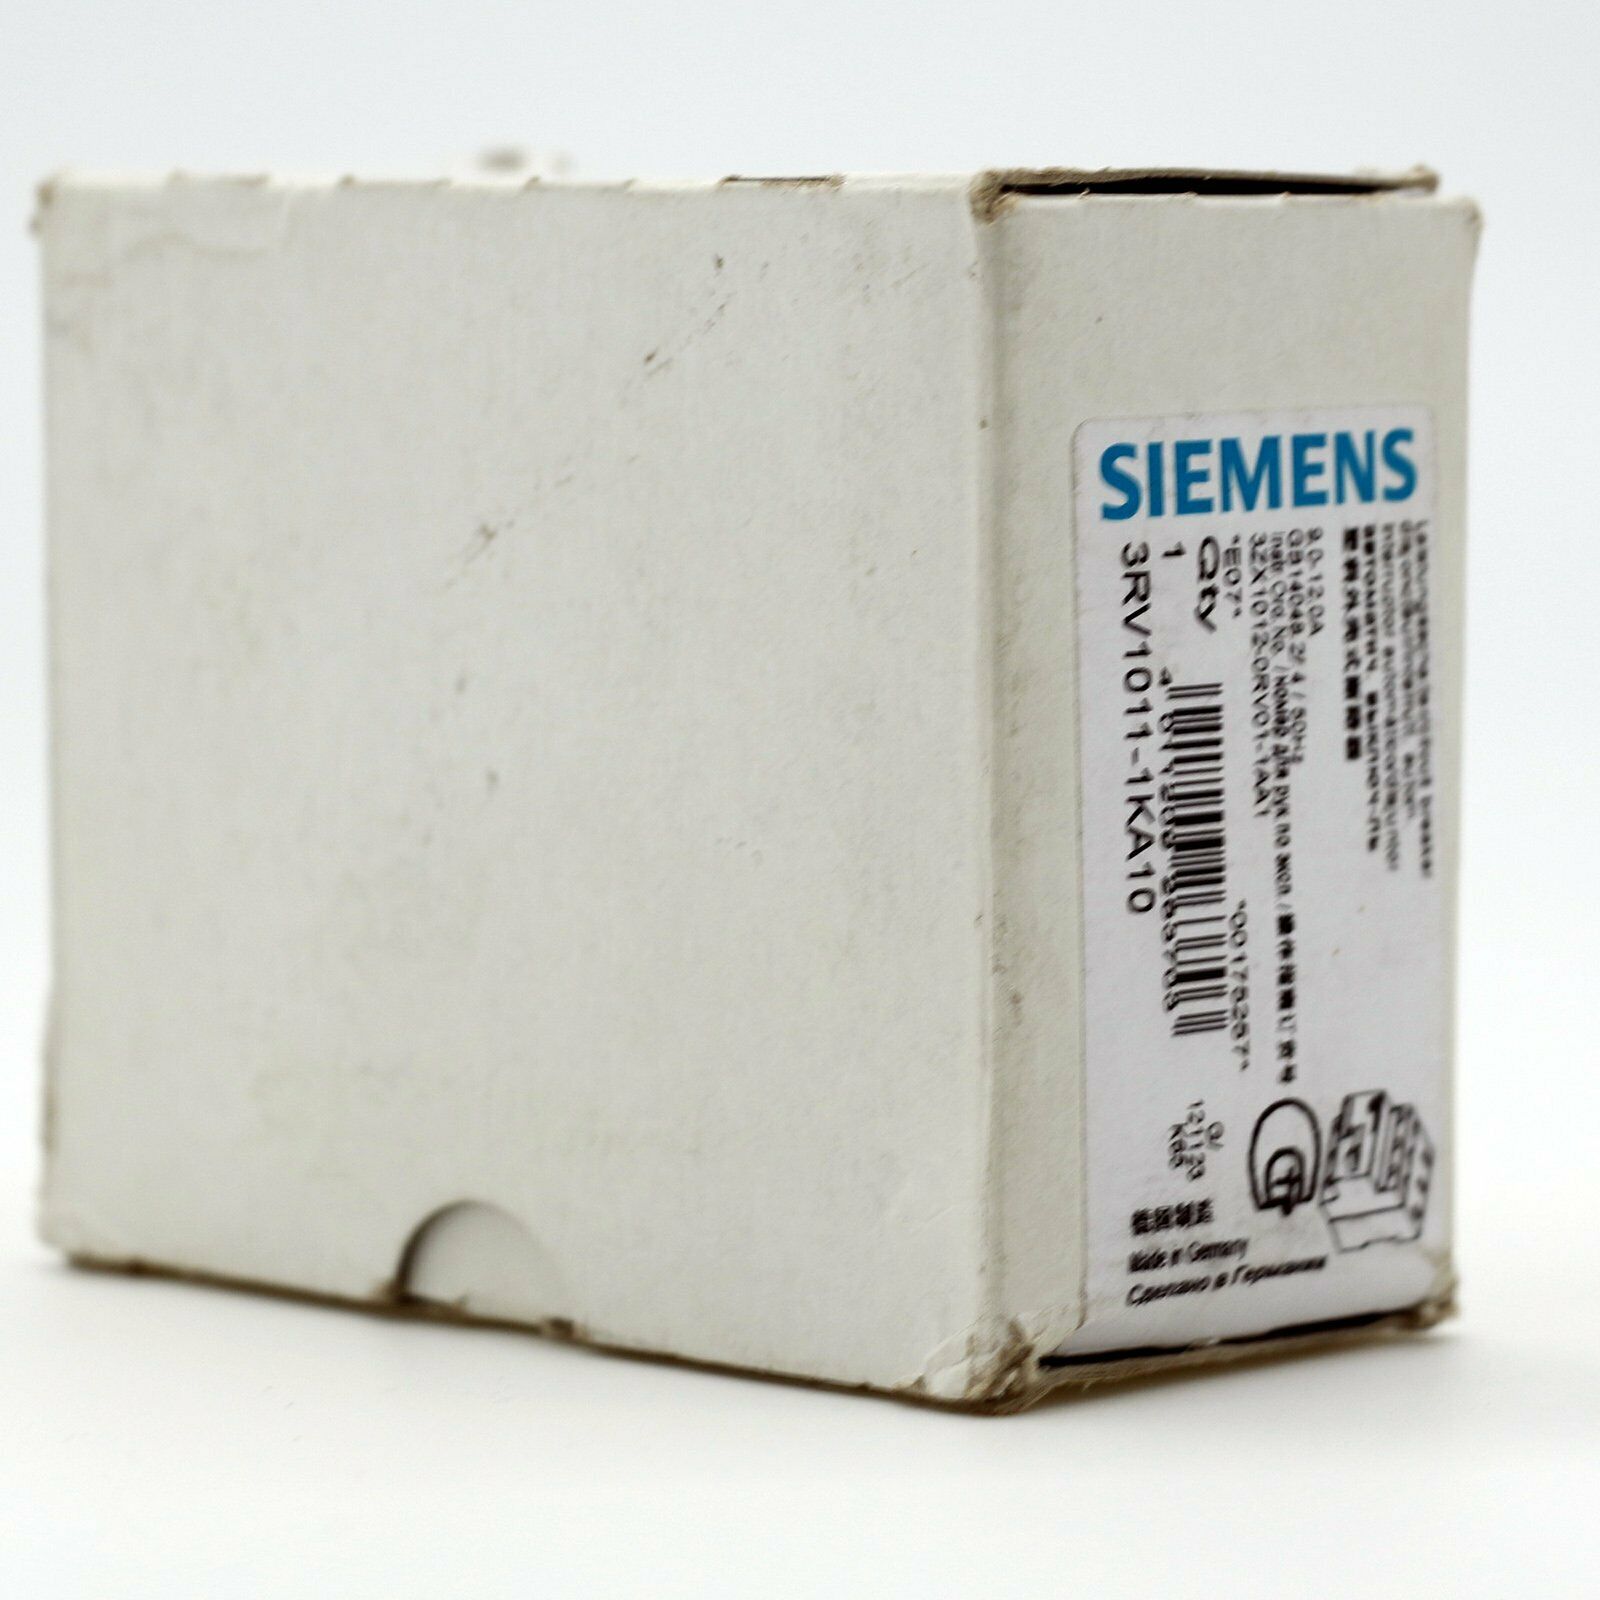 1PCS New IN BOX Siemens Contactor 3RV1011-1KA10 3RV10111KA10 One year warranty KOEED 1, 90%, import_2020_10_10_031751, Other, Siemens